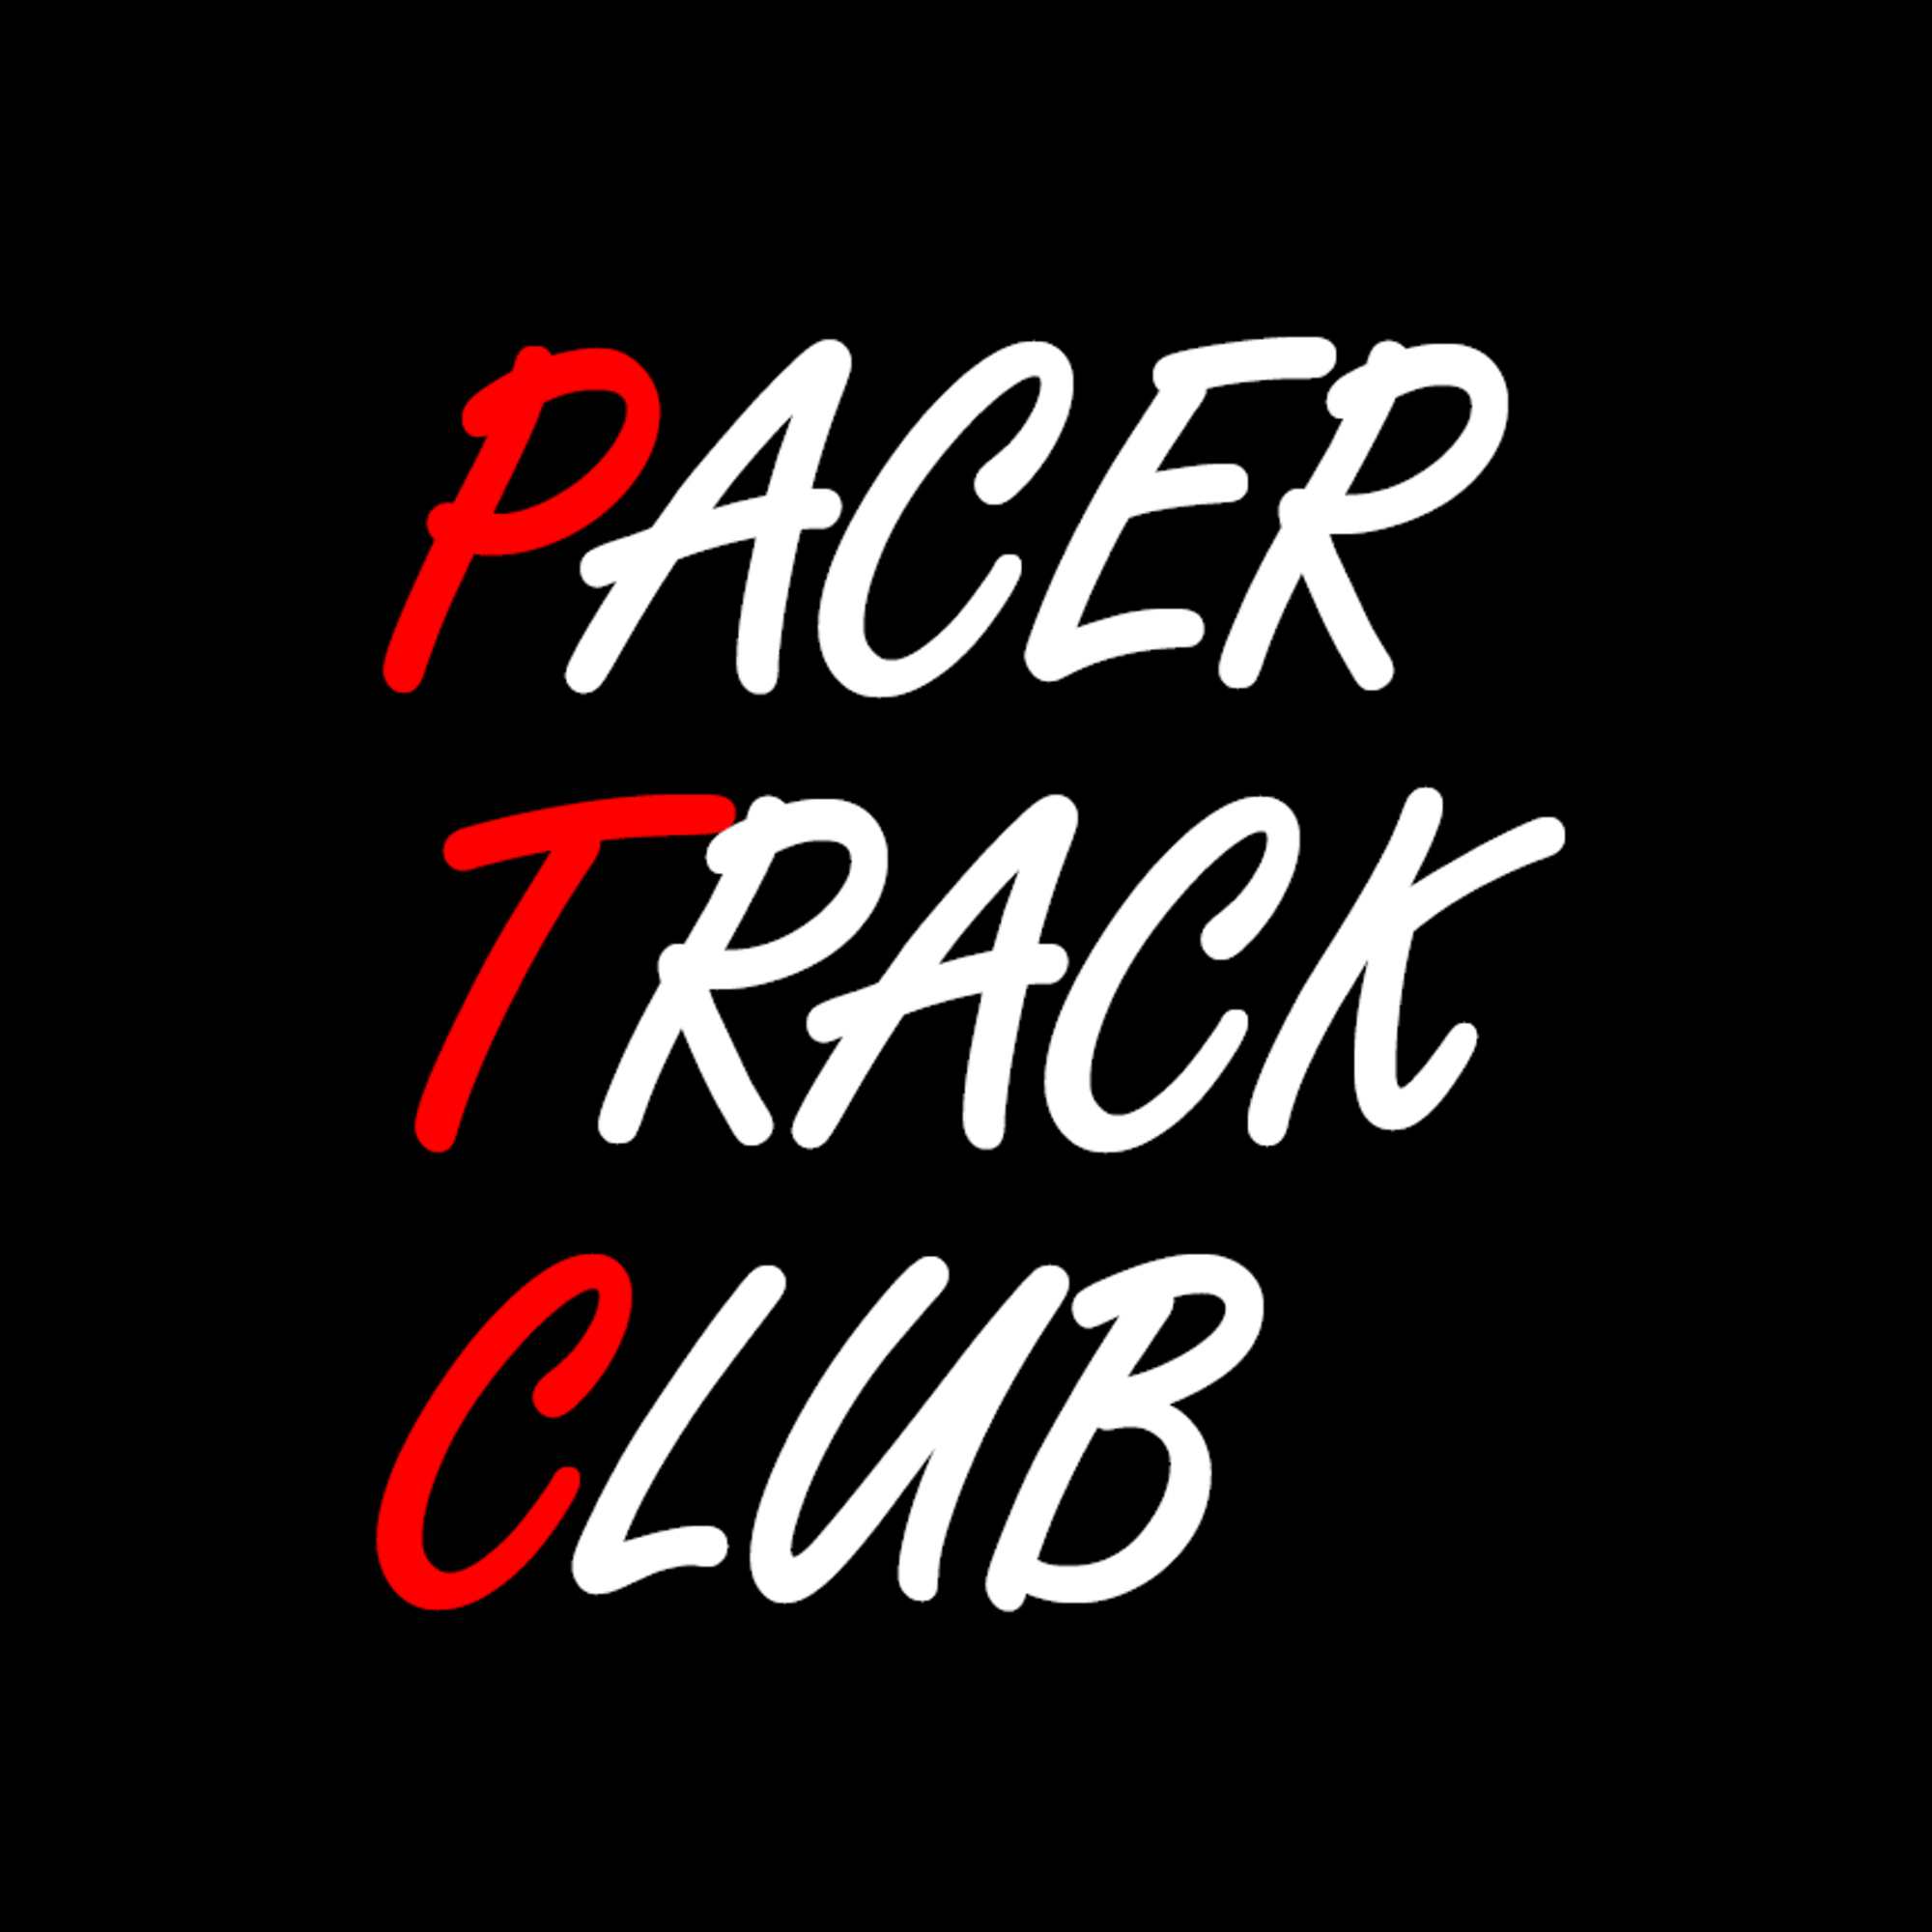 Pacer Track Club Logo